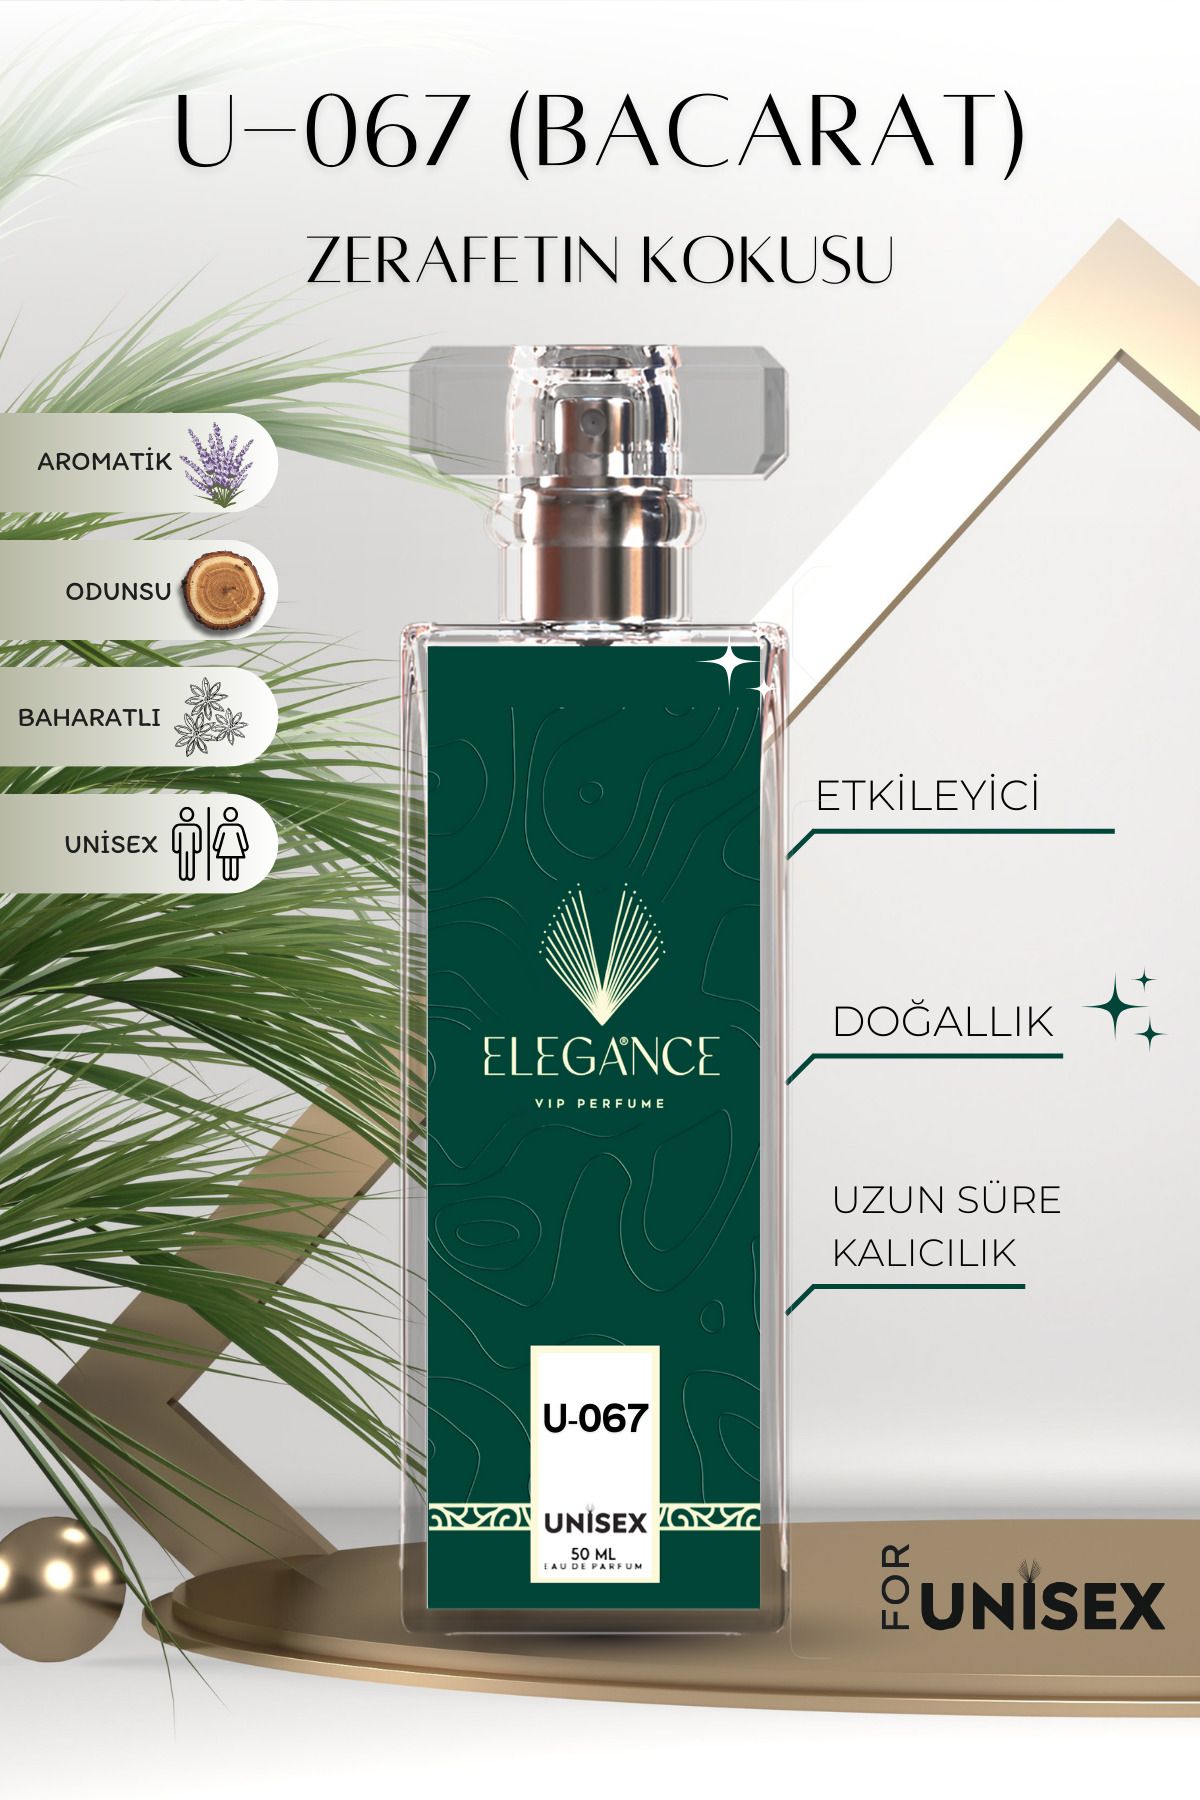 Elegance vip Perfume Kurkdıjan "baccarat Rouge 540" U-067 Eau De Parfum "unısex Kullanım